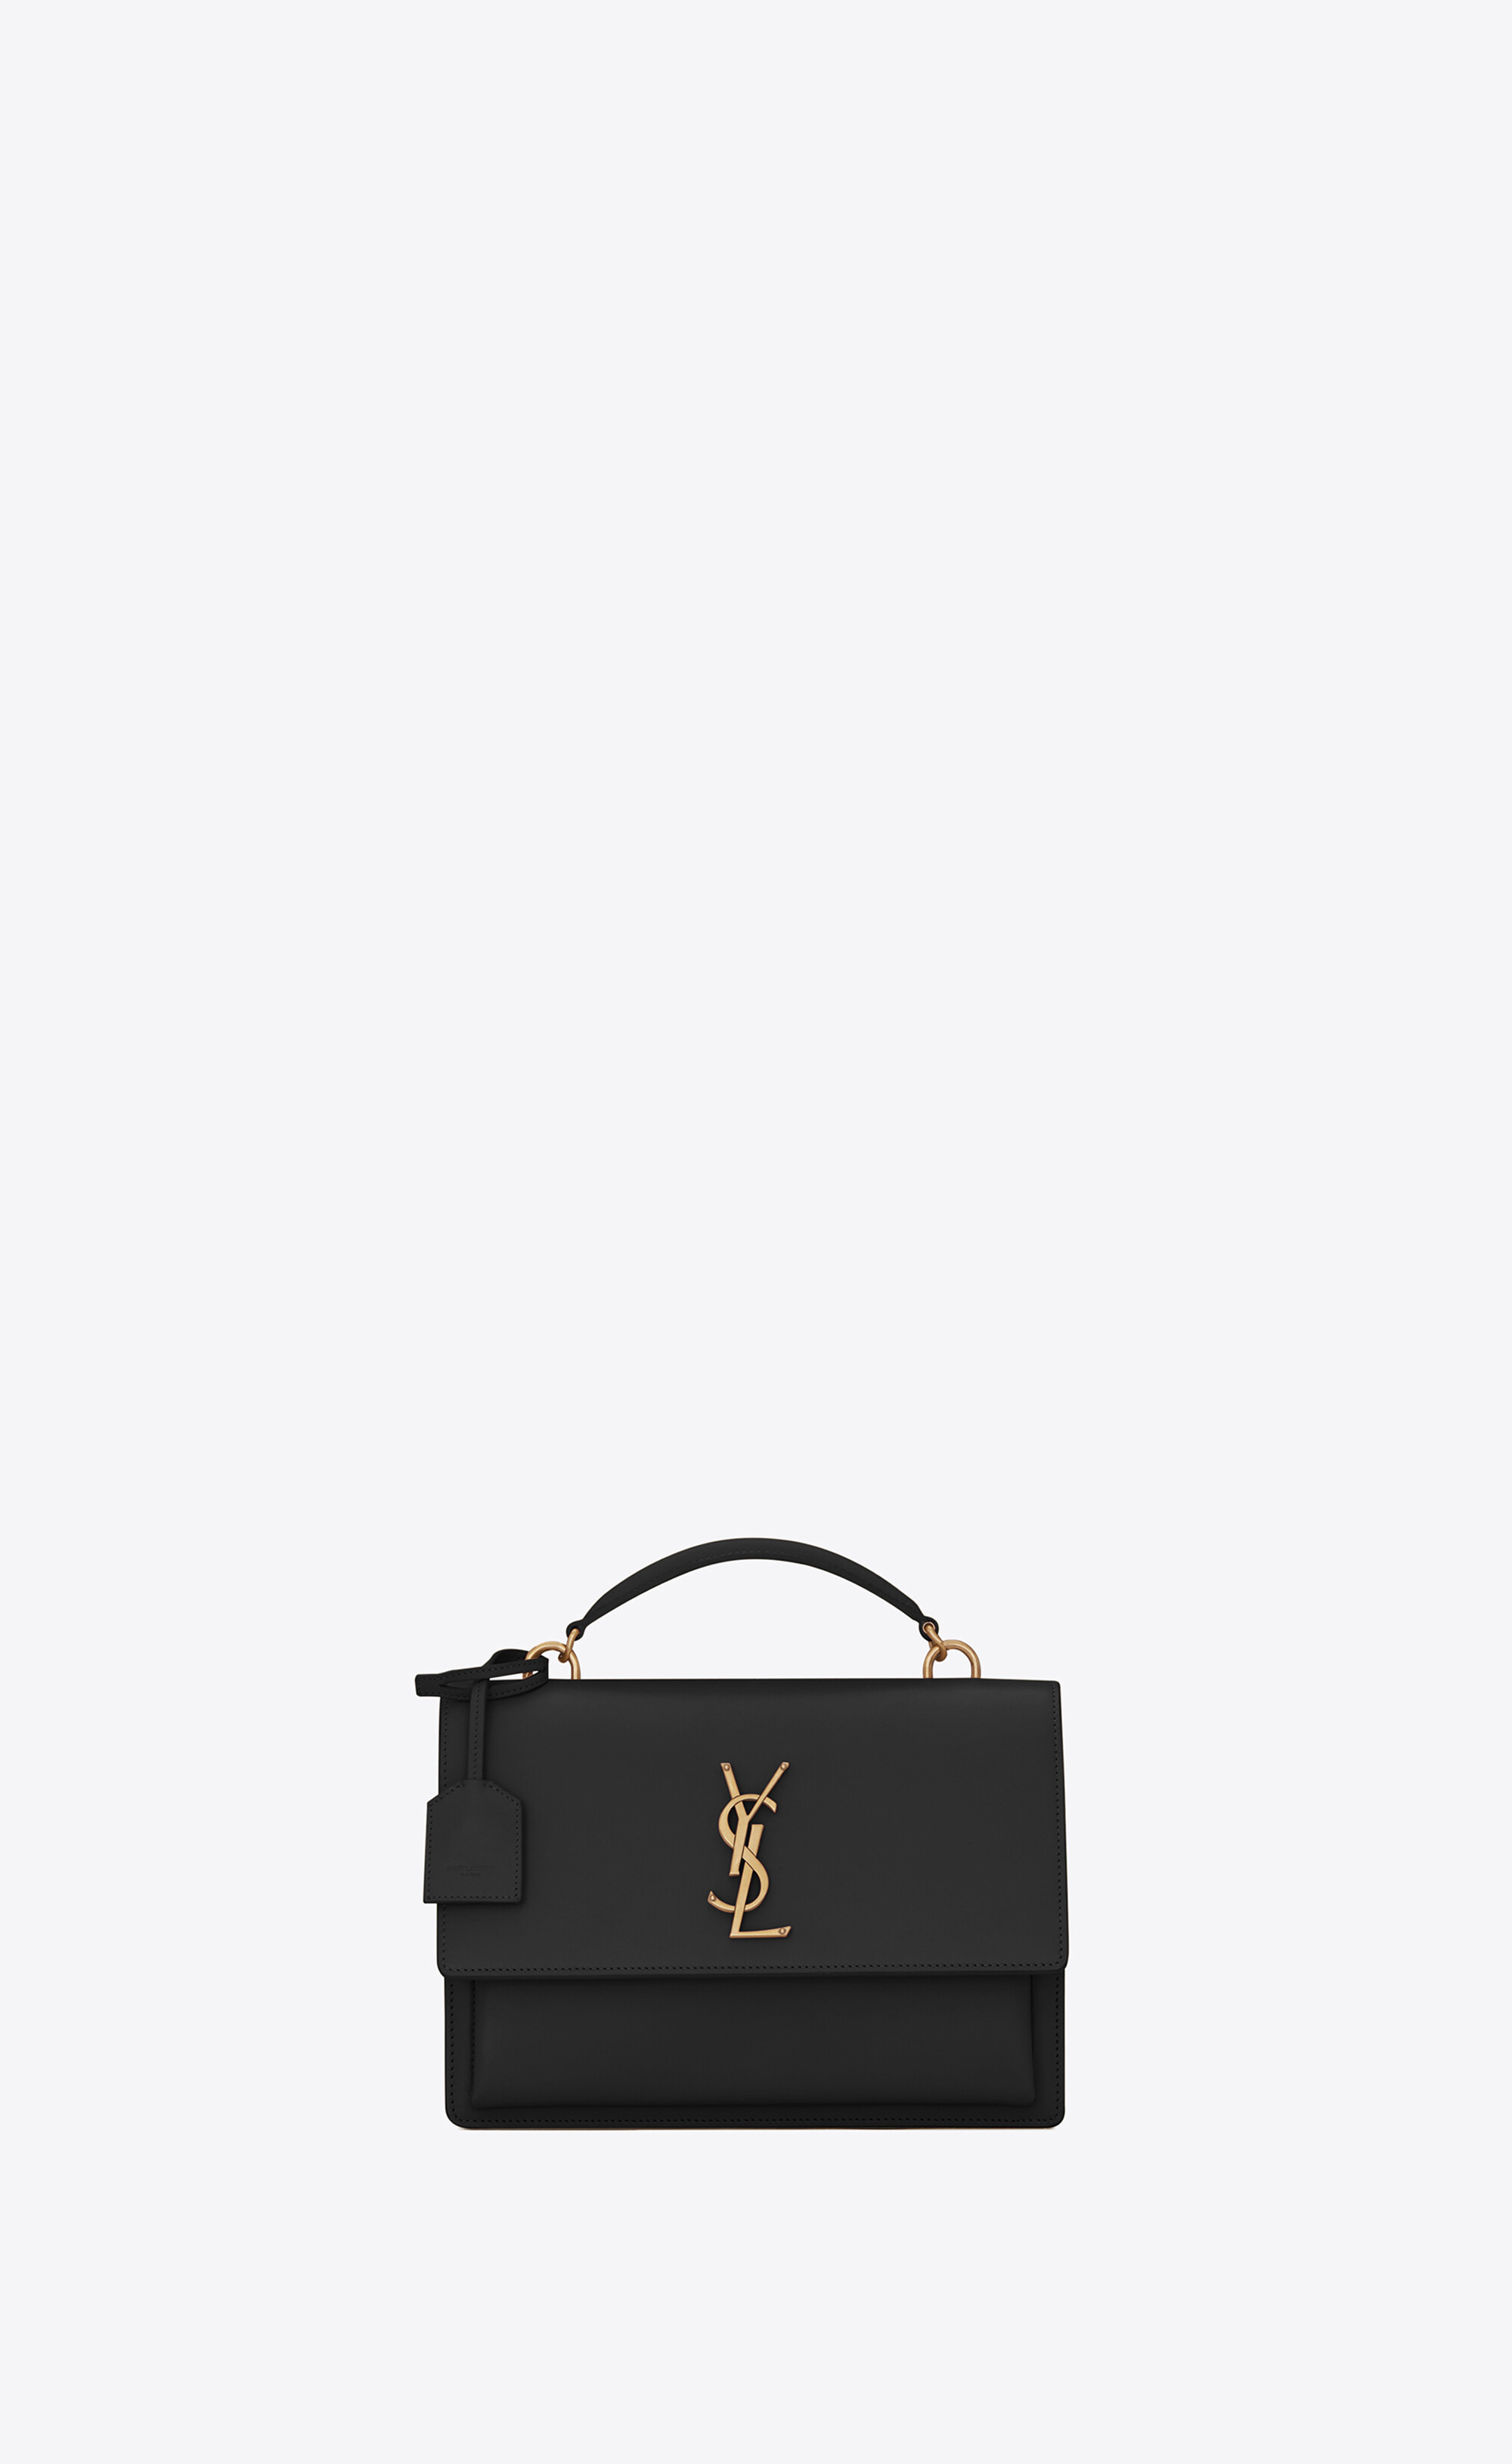 IetpShops, SAINT LAURENT 'HOBO' SHOULDER BAG, Saint Laurent 'Sunset Medium'  shoulder bag